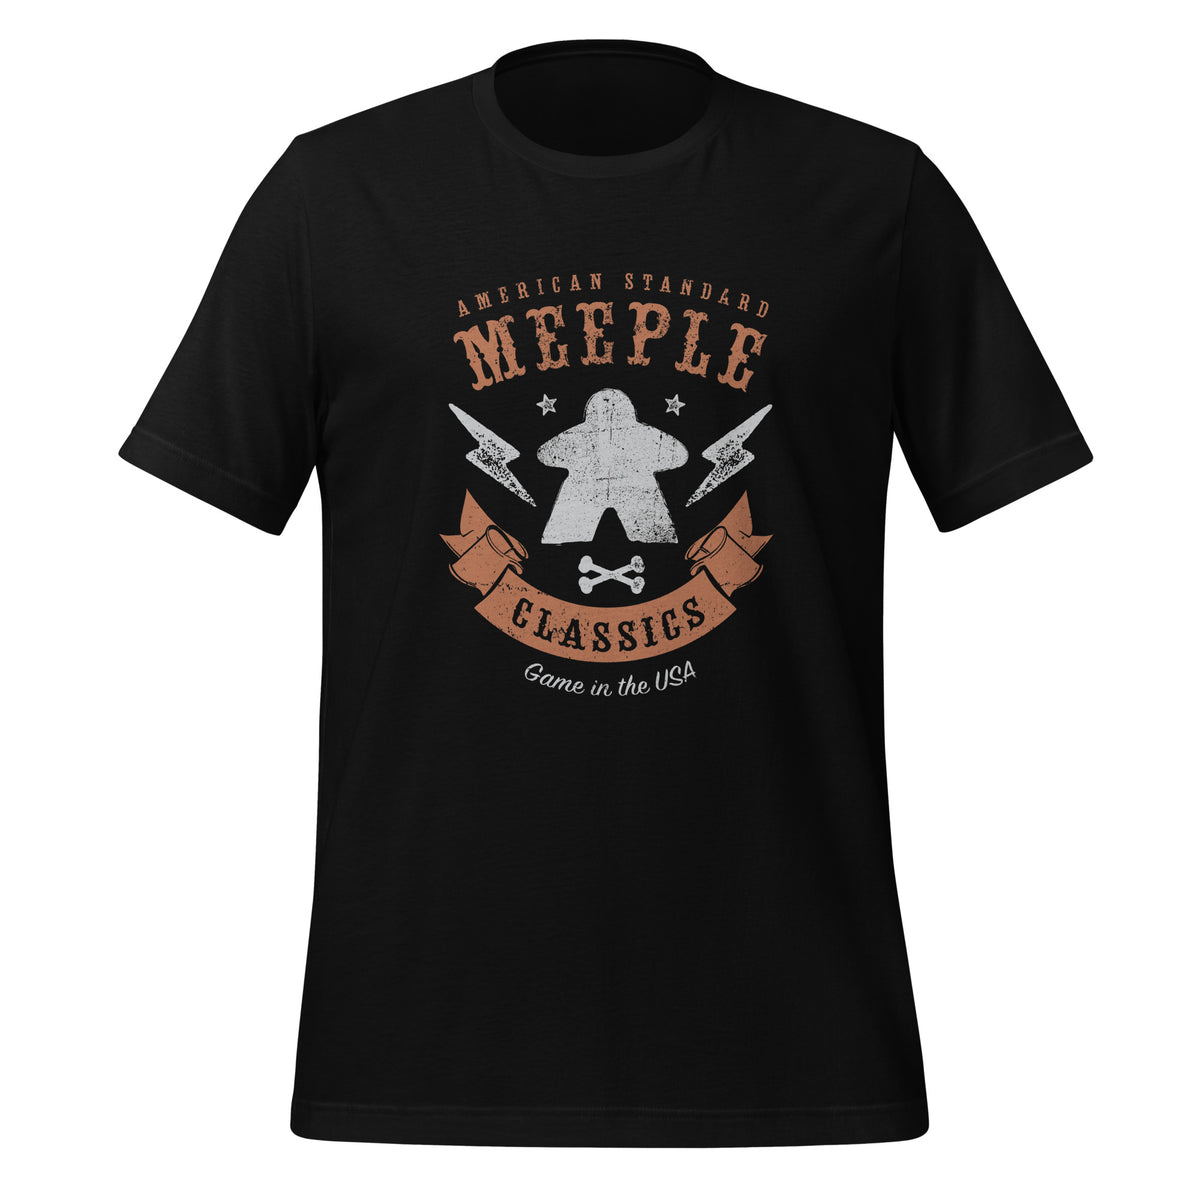 American Meeple Classics design on a black t-shirt